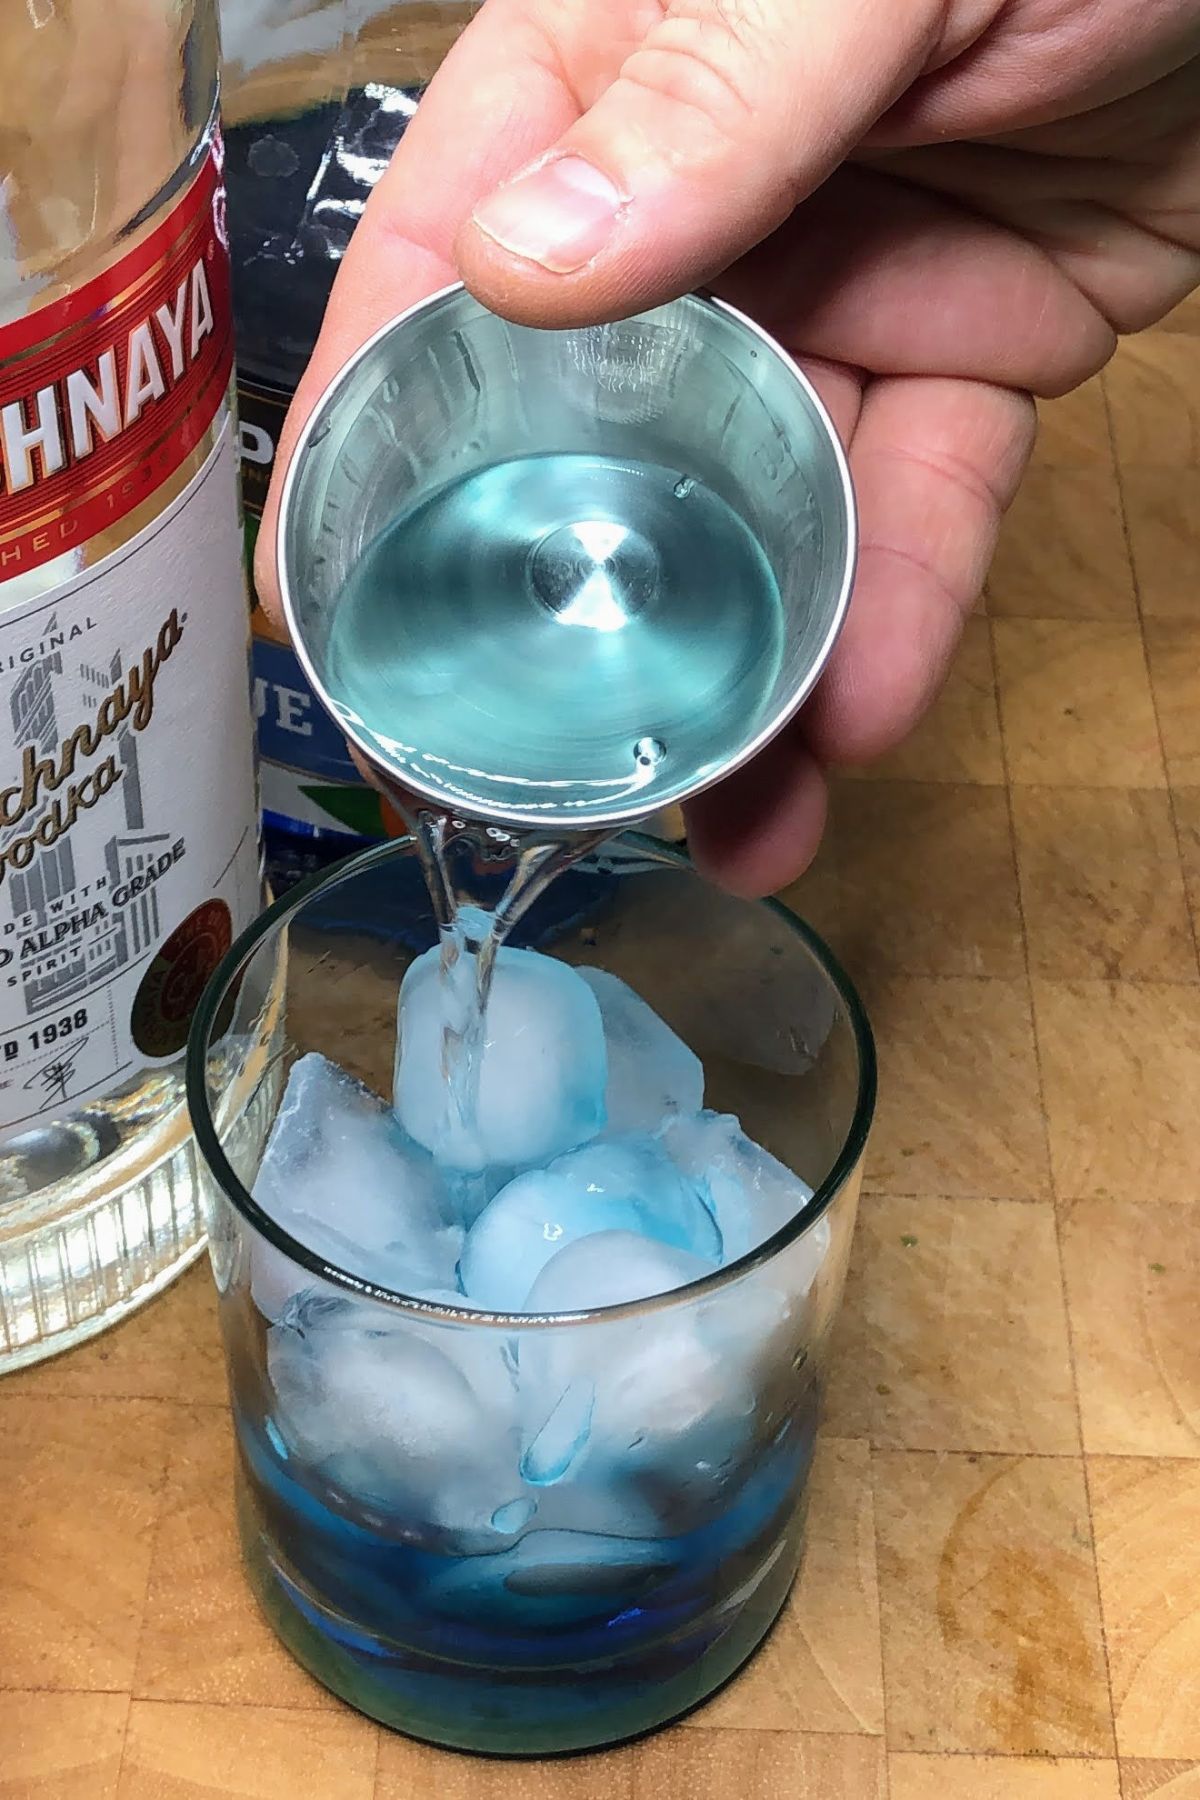 Pouring vodka into a rocks glass.